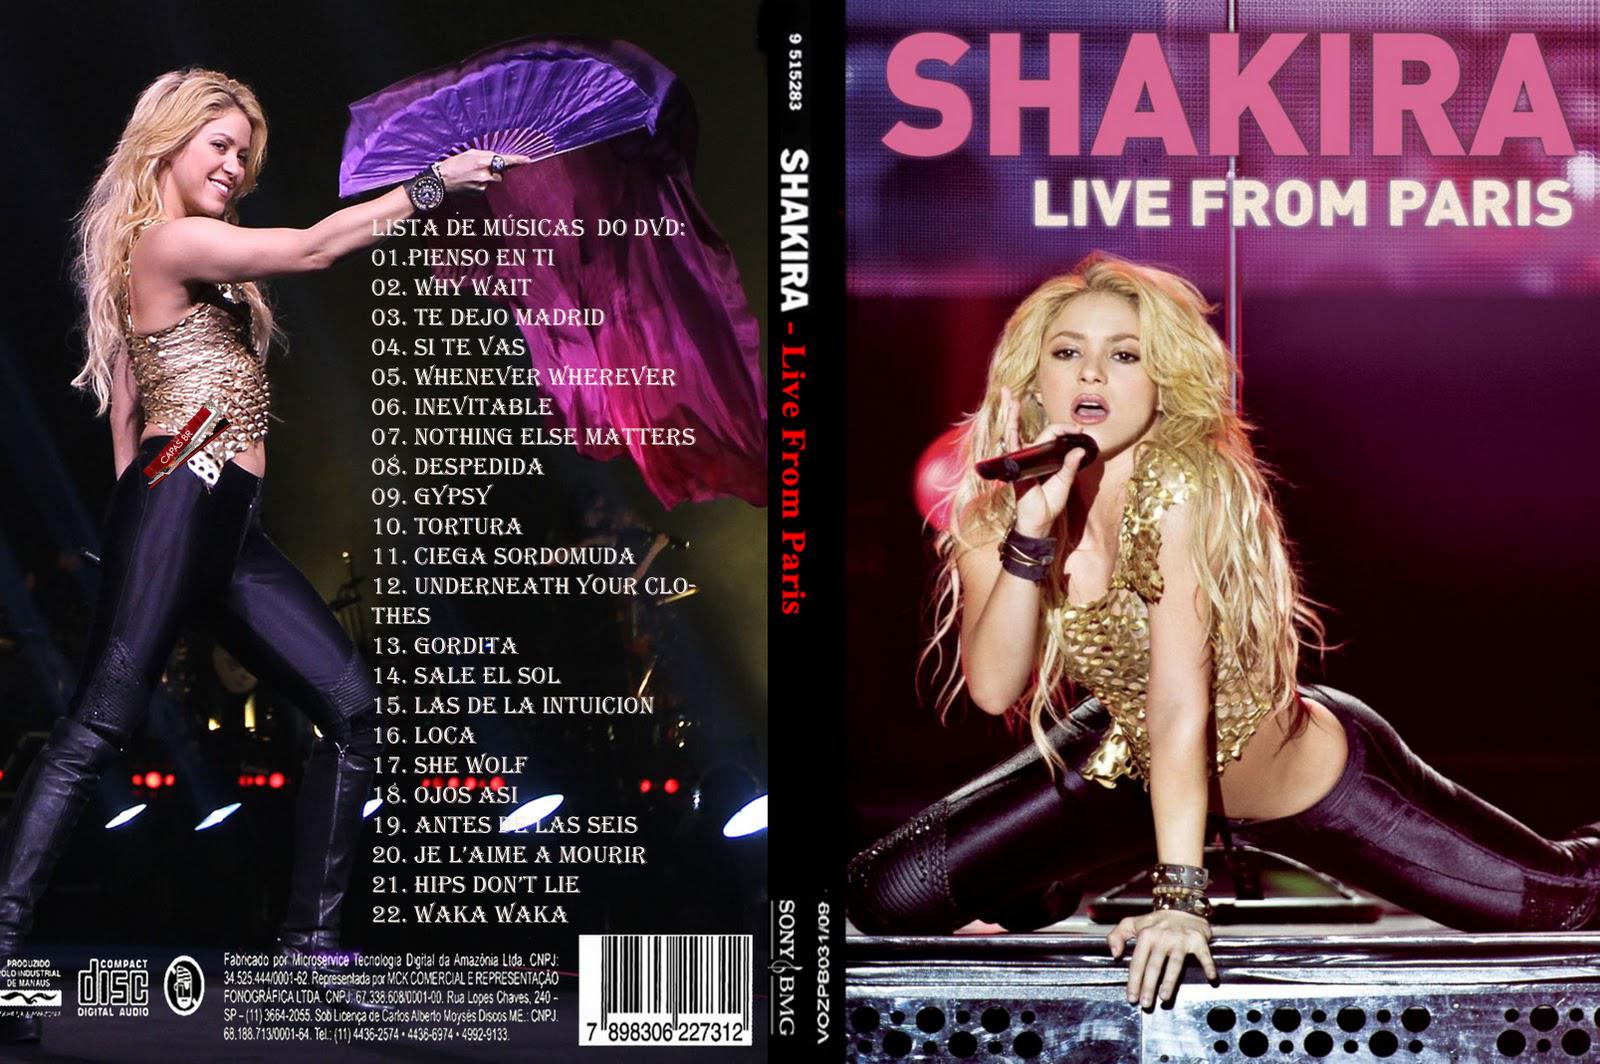 https://blogger.googleusercontent.com/img/b/R29vZ2xl/AVvXsEgjnOETk5wEUk2vwdcNMKodAJHHyOvk_uB8c4wKcZ0e2g9H4UbYI6b4DxESqqLtmIDUPDK1Q32WNj7C9UkeBOaCxnphvDoJyNyEJ9EM6aVcxu7YpqPpqmLzCM9aSXIrv8JEflt5s9f5d2E/s1600/Shakira+-+Live+from+Paris++2011.jpg